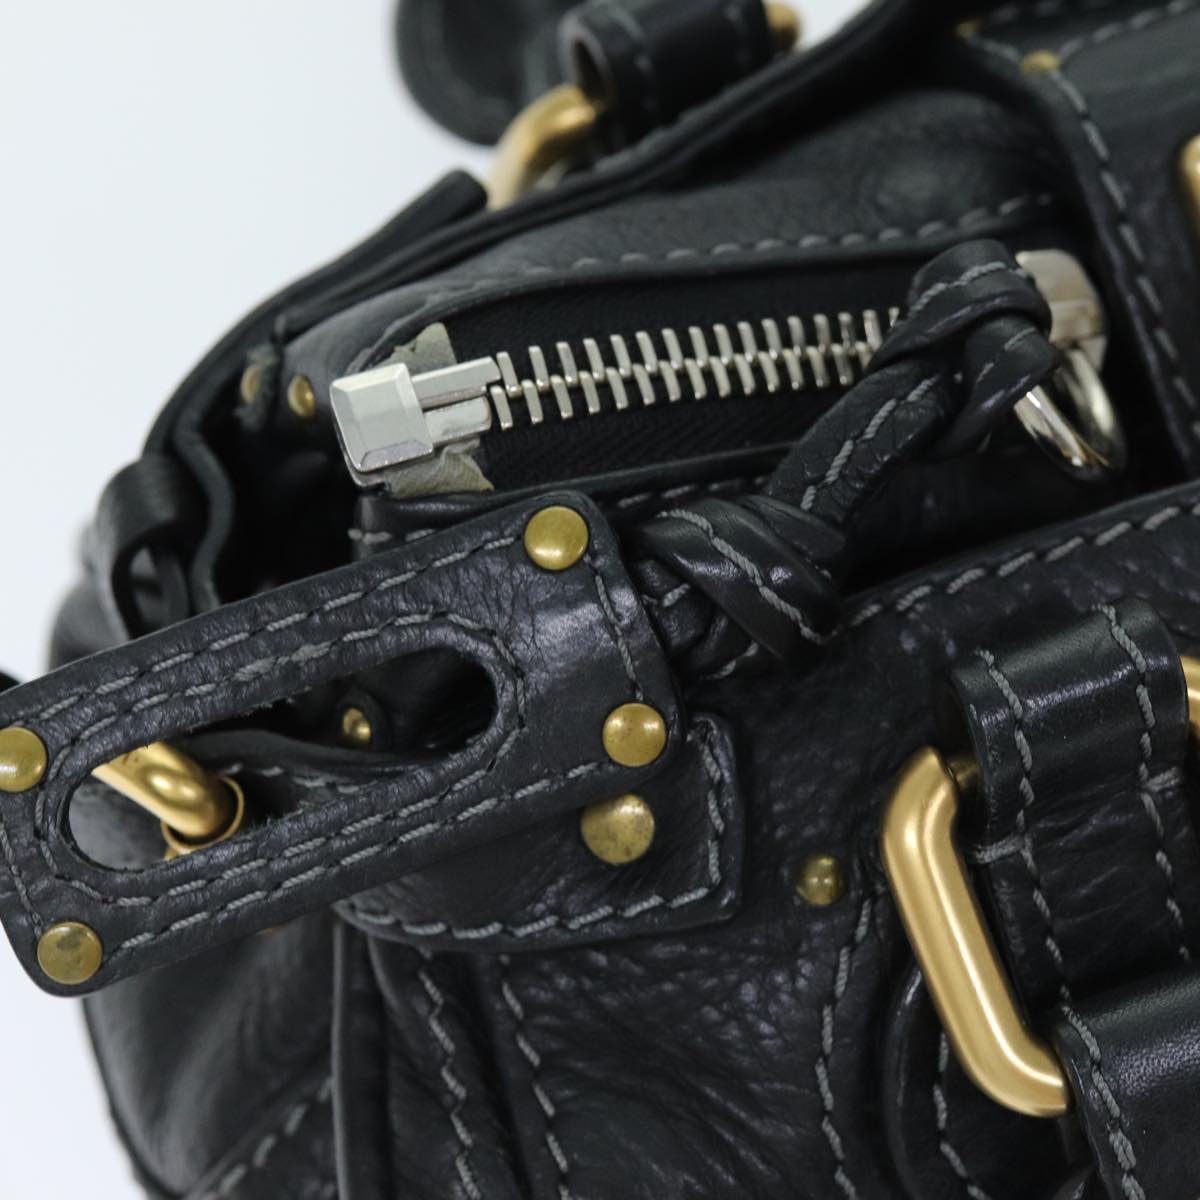 Chloe Paddington Hand Bag Leather Black Auth yk12544